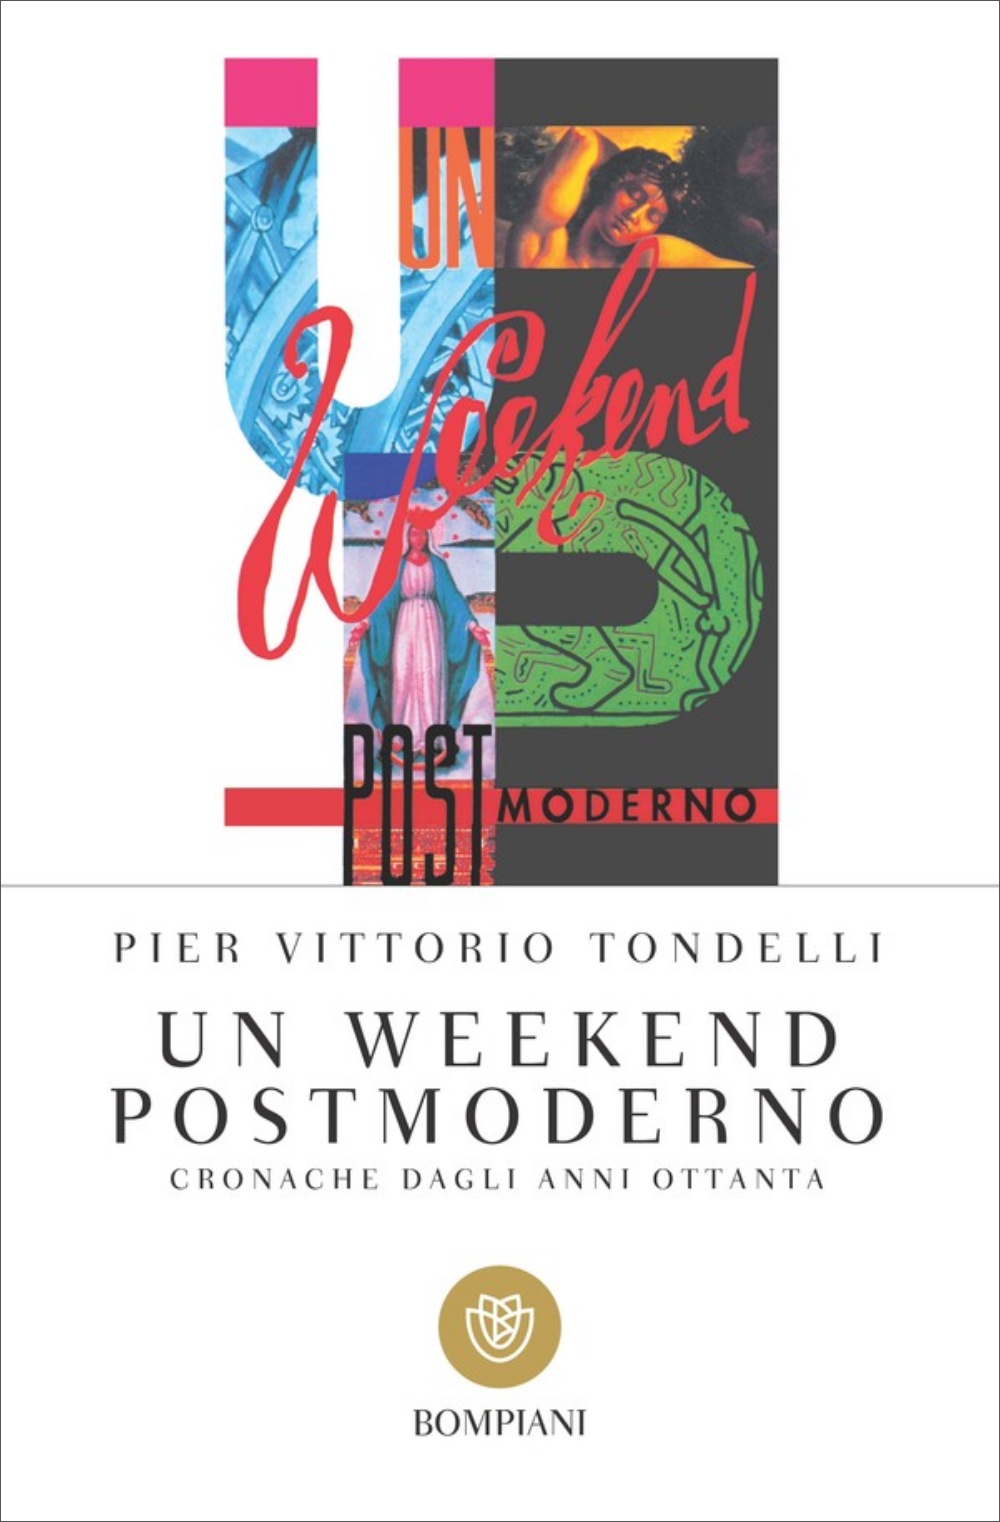 Un weekend postmoderno (Italian language, 1990, Bompiani)